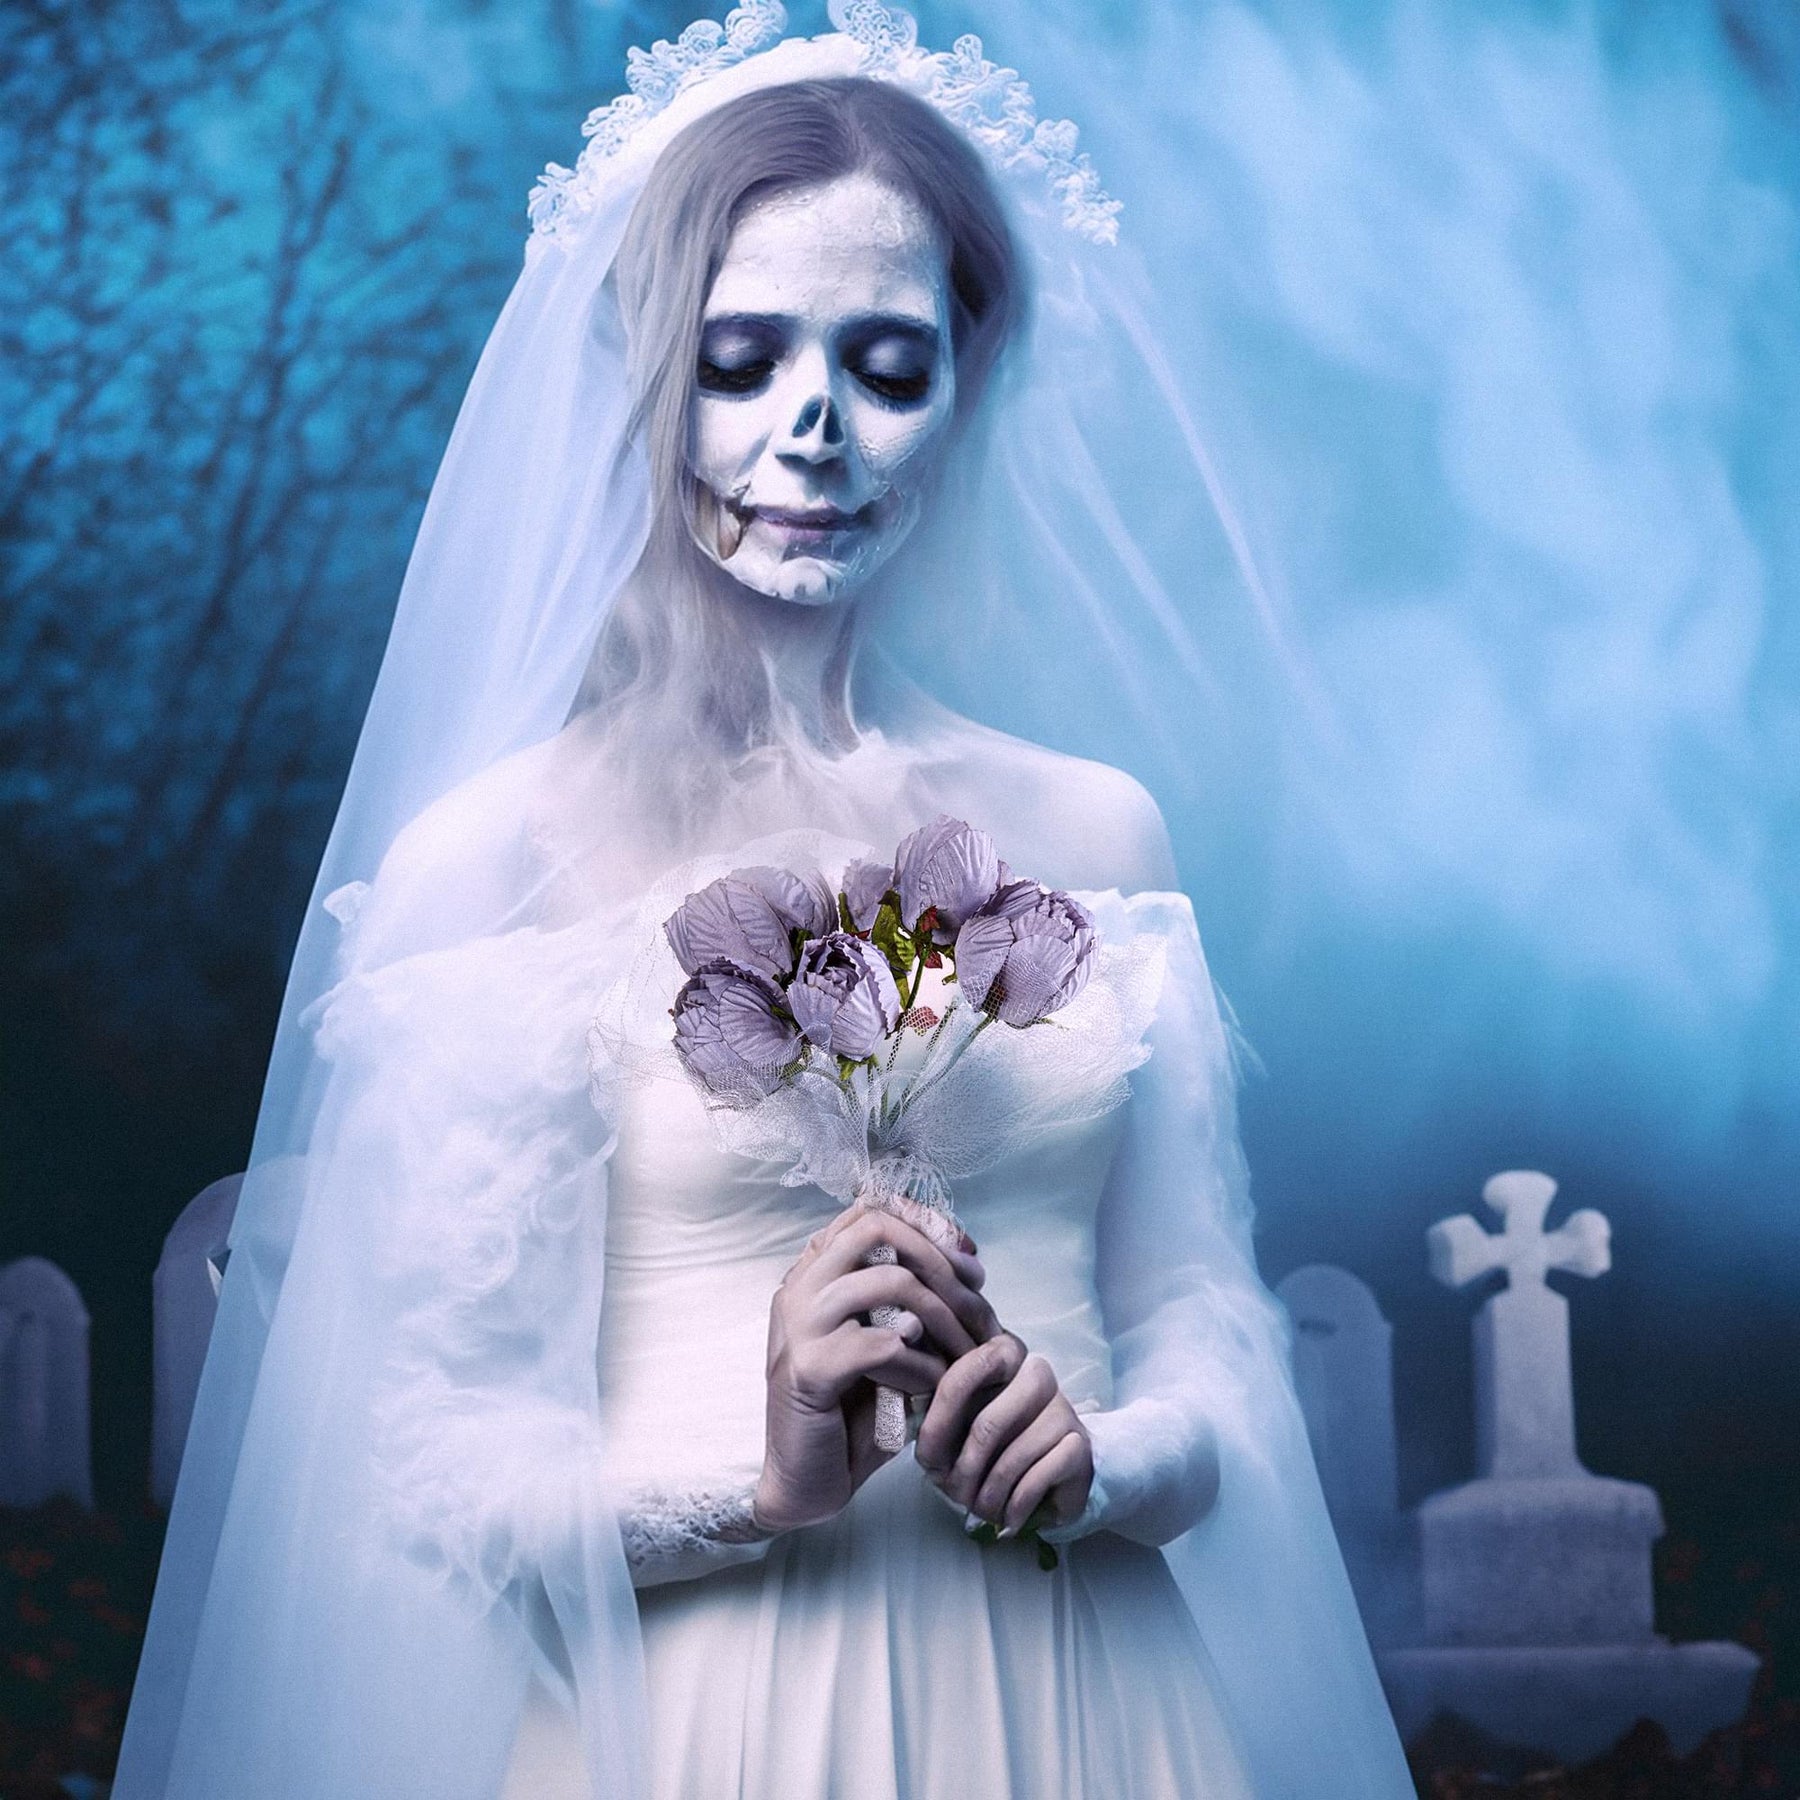 Tim Burton's Corpse Bride Bouquet Costume Accessory